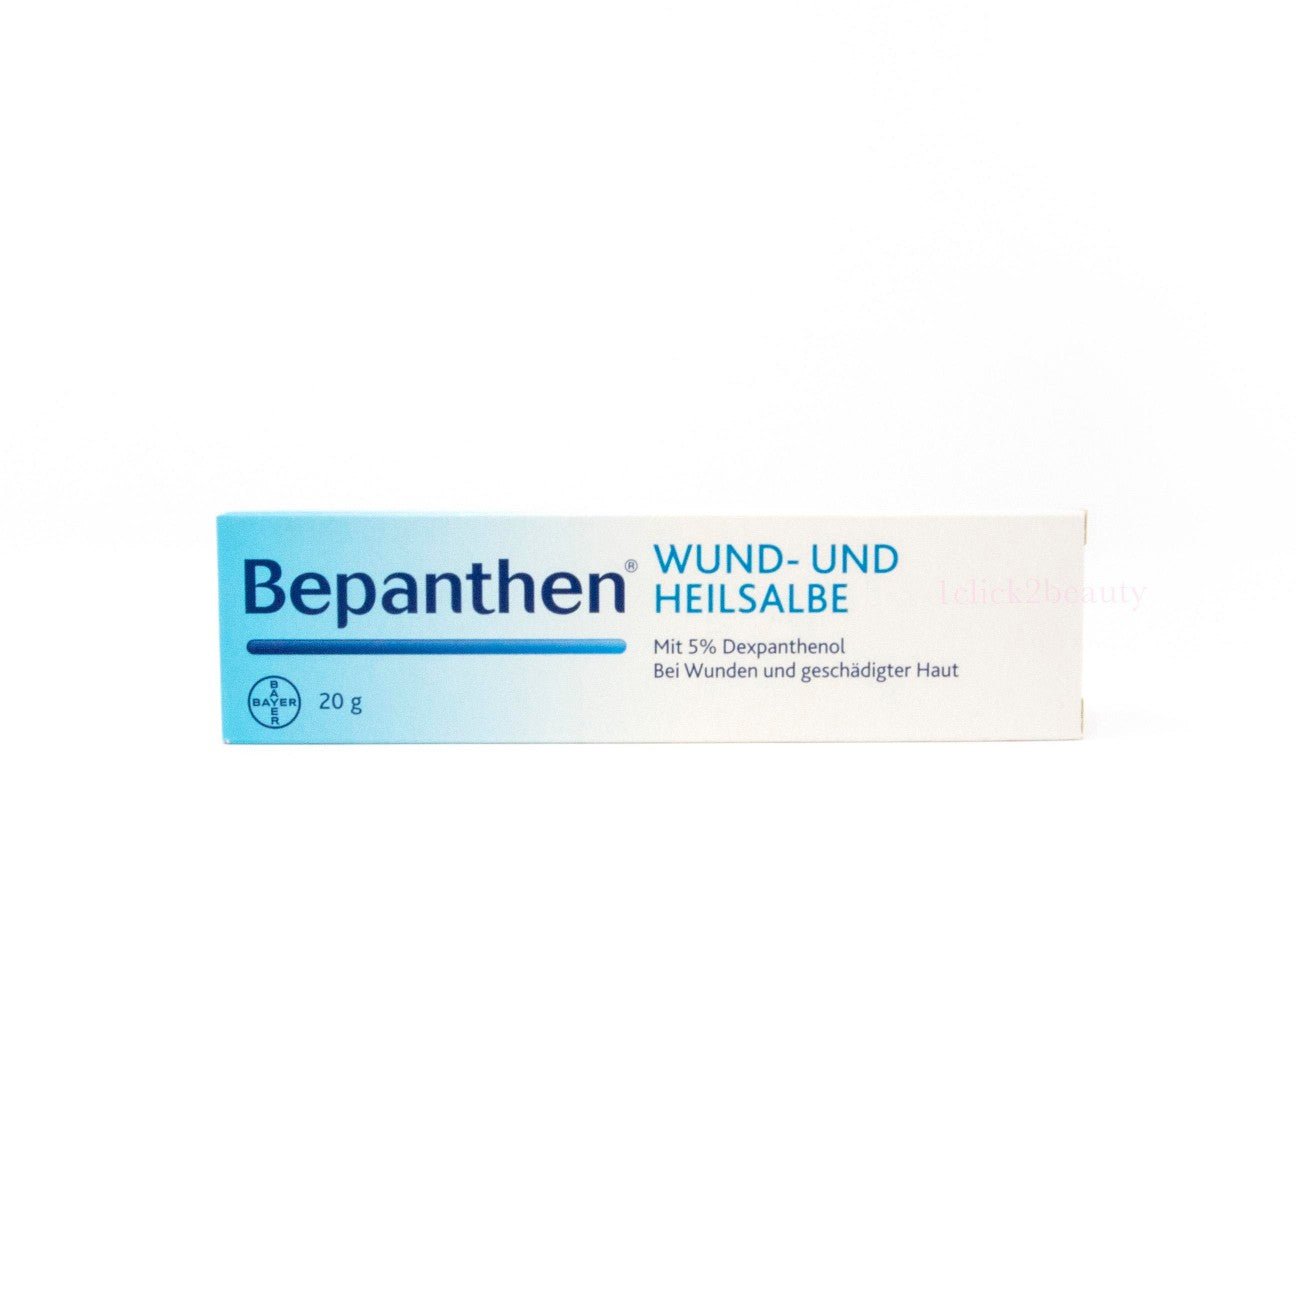 Bepanthen癒合藥膏 - 1click2beauty